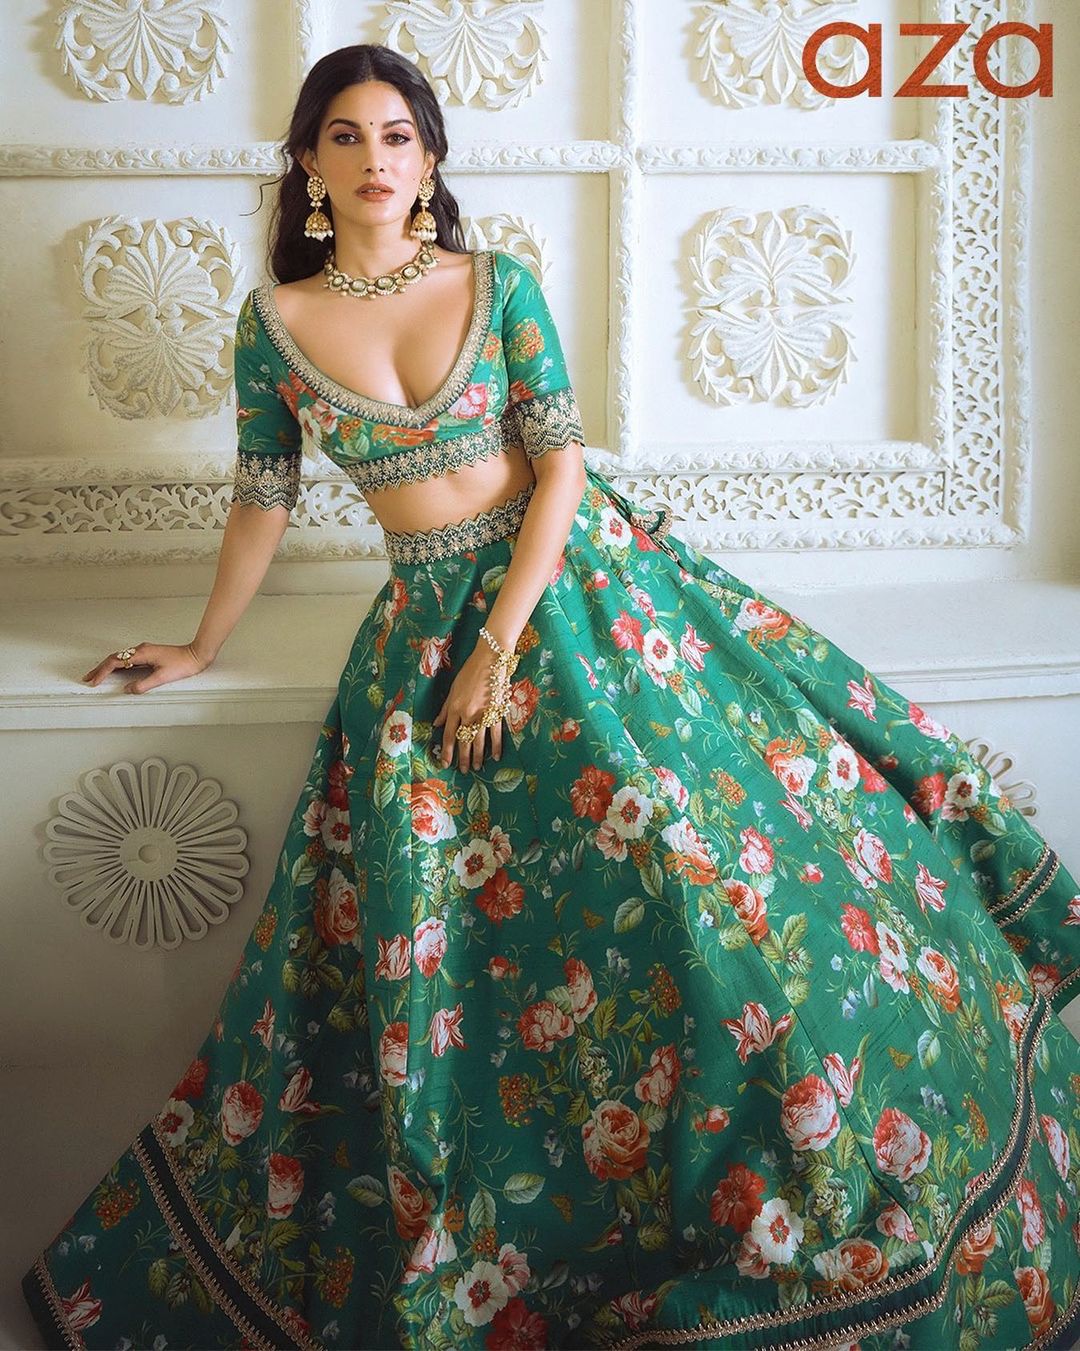 Amyra Dastur Photoshoot for aza fashions cover story, January 2022